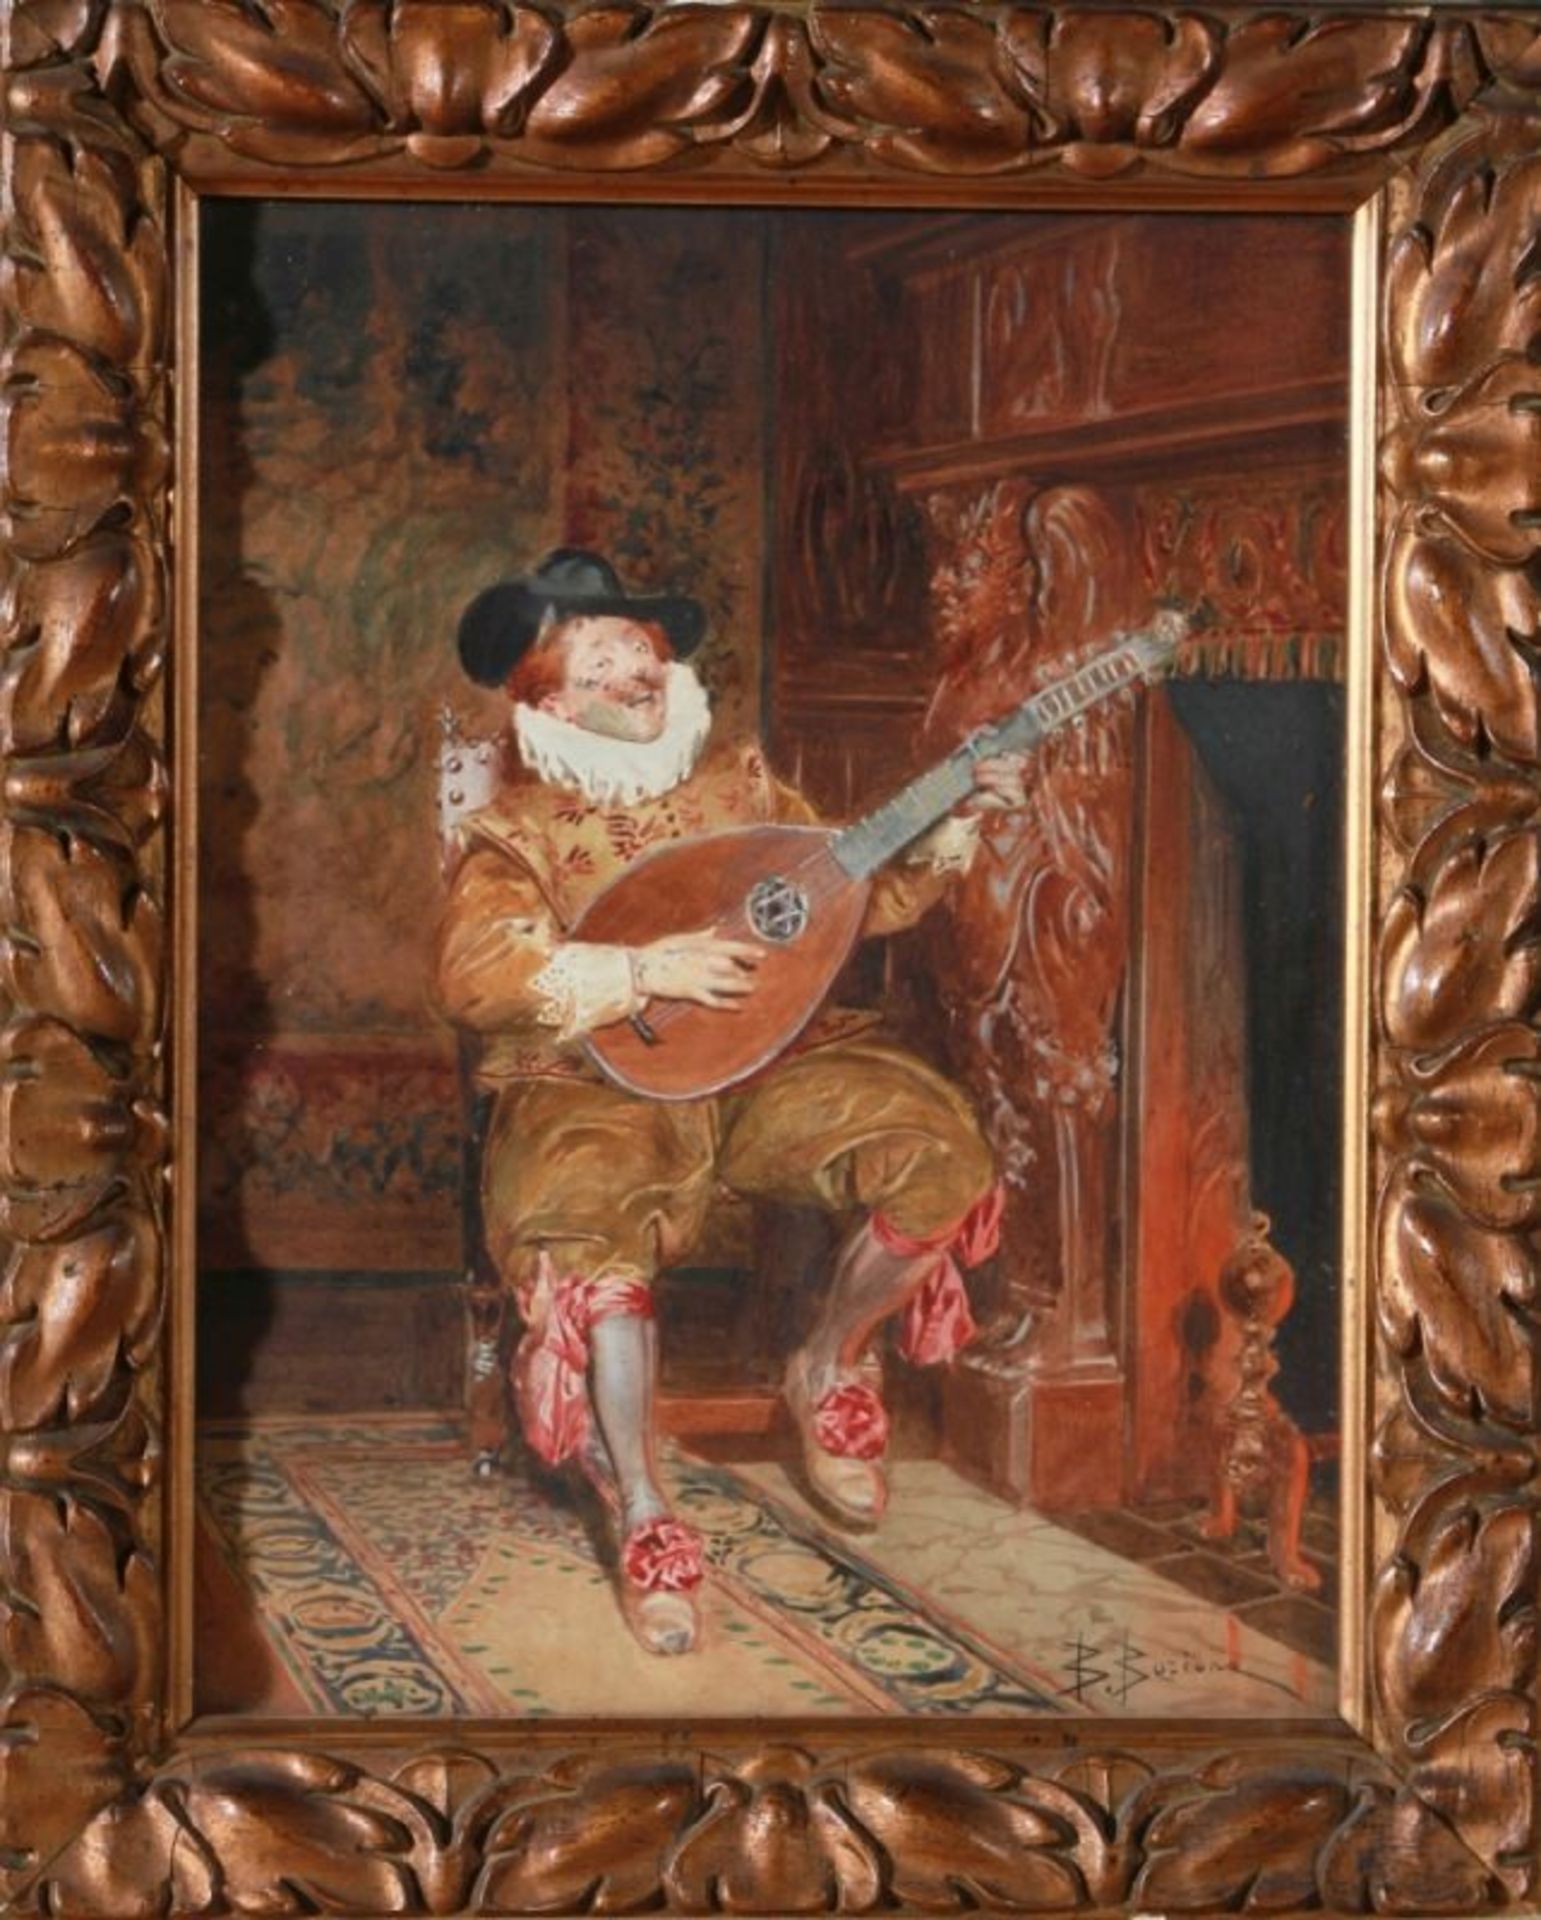 Borione, Bernard Louis, französischer Maler geb. 1865. "Musikant vor dem Kamin", Aquarell,sign.